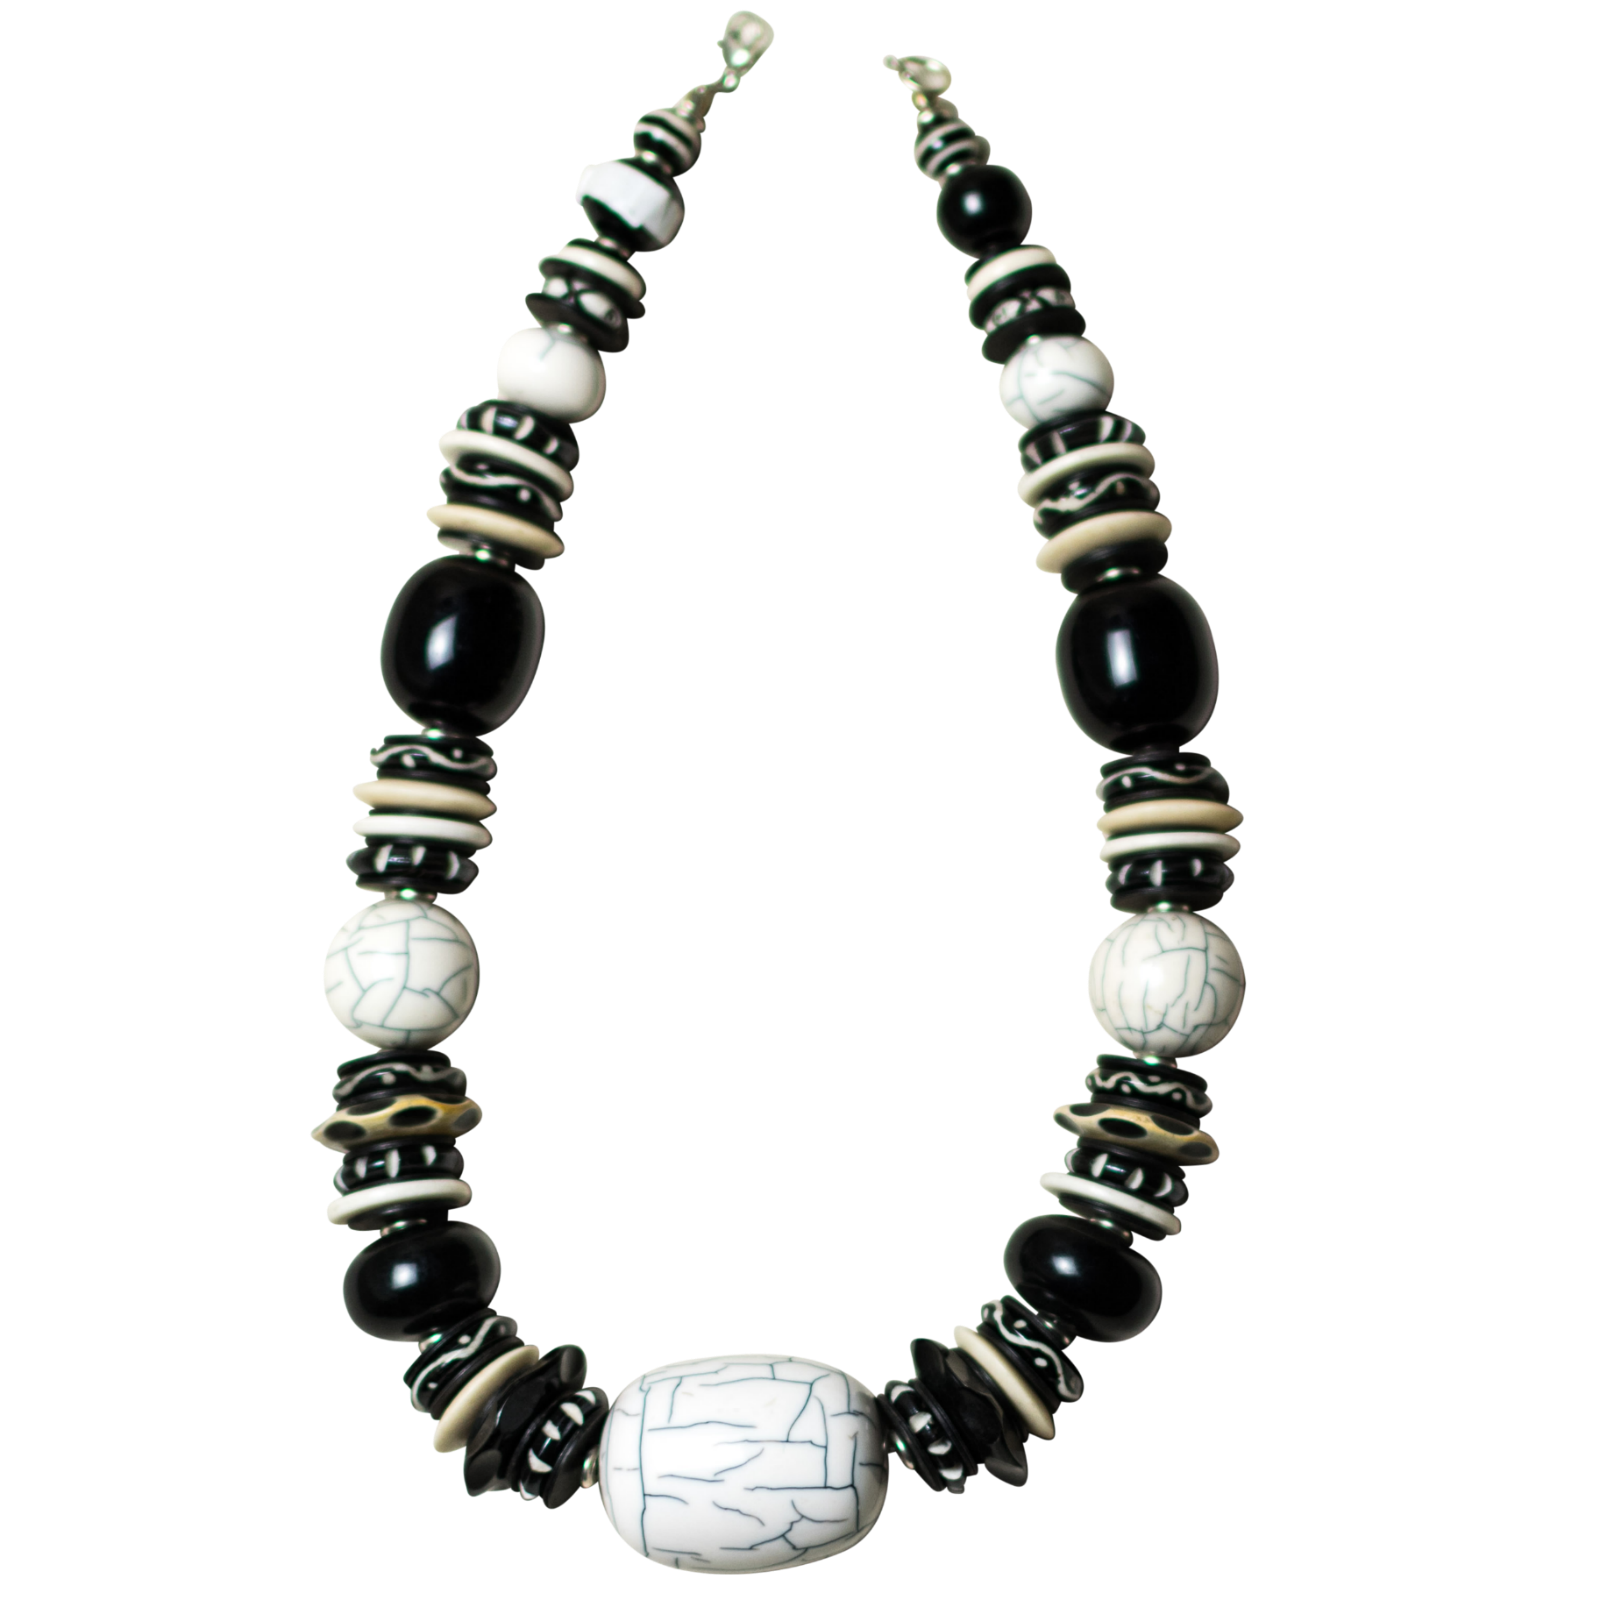 Black and White Camel Bone Necklace